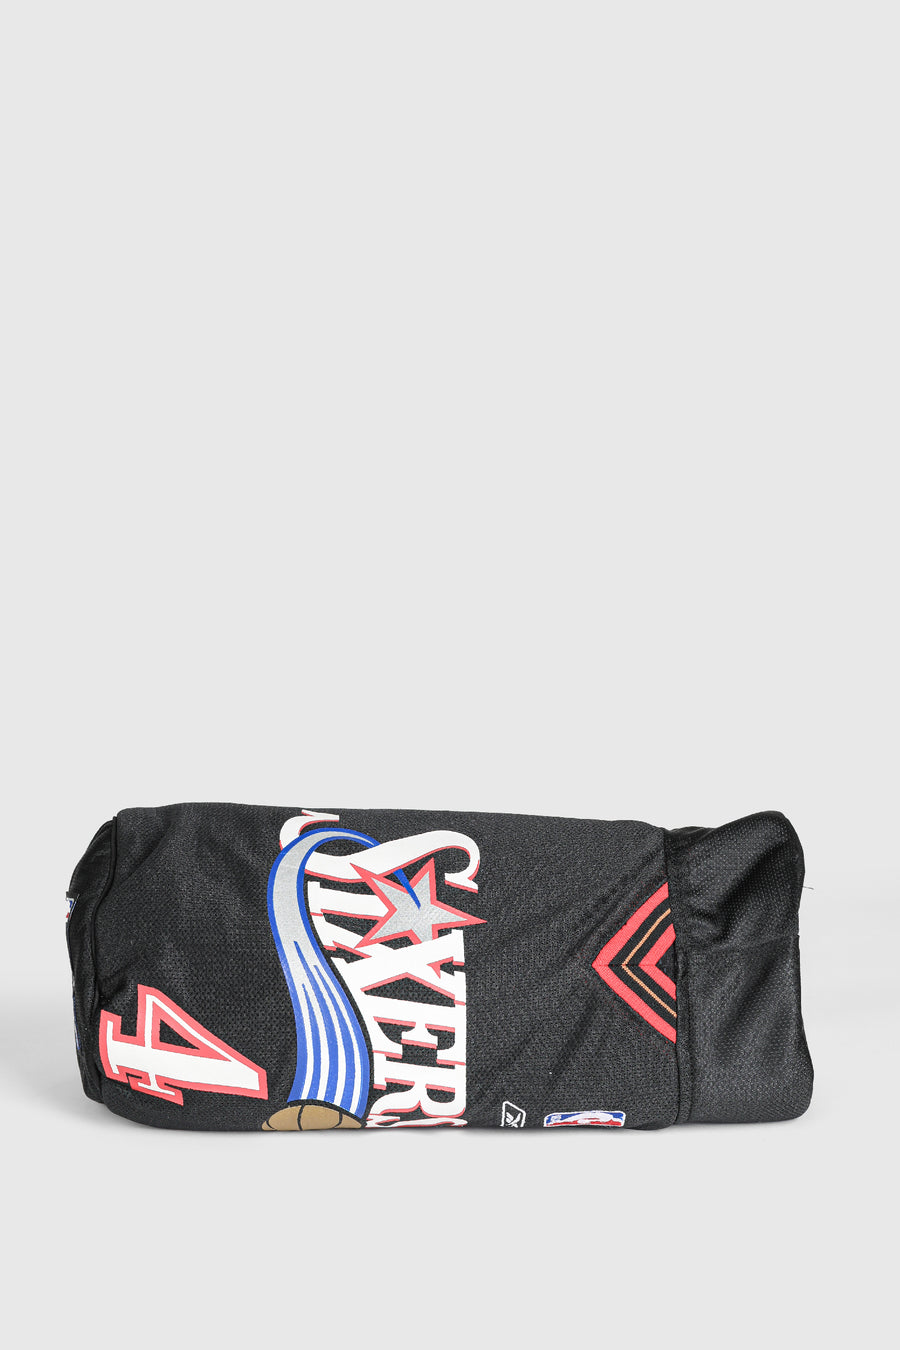 Rework Sixers NBA Duffle Bag